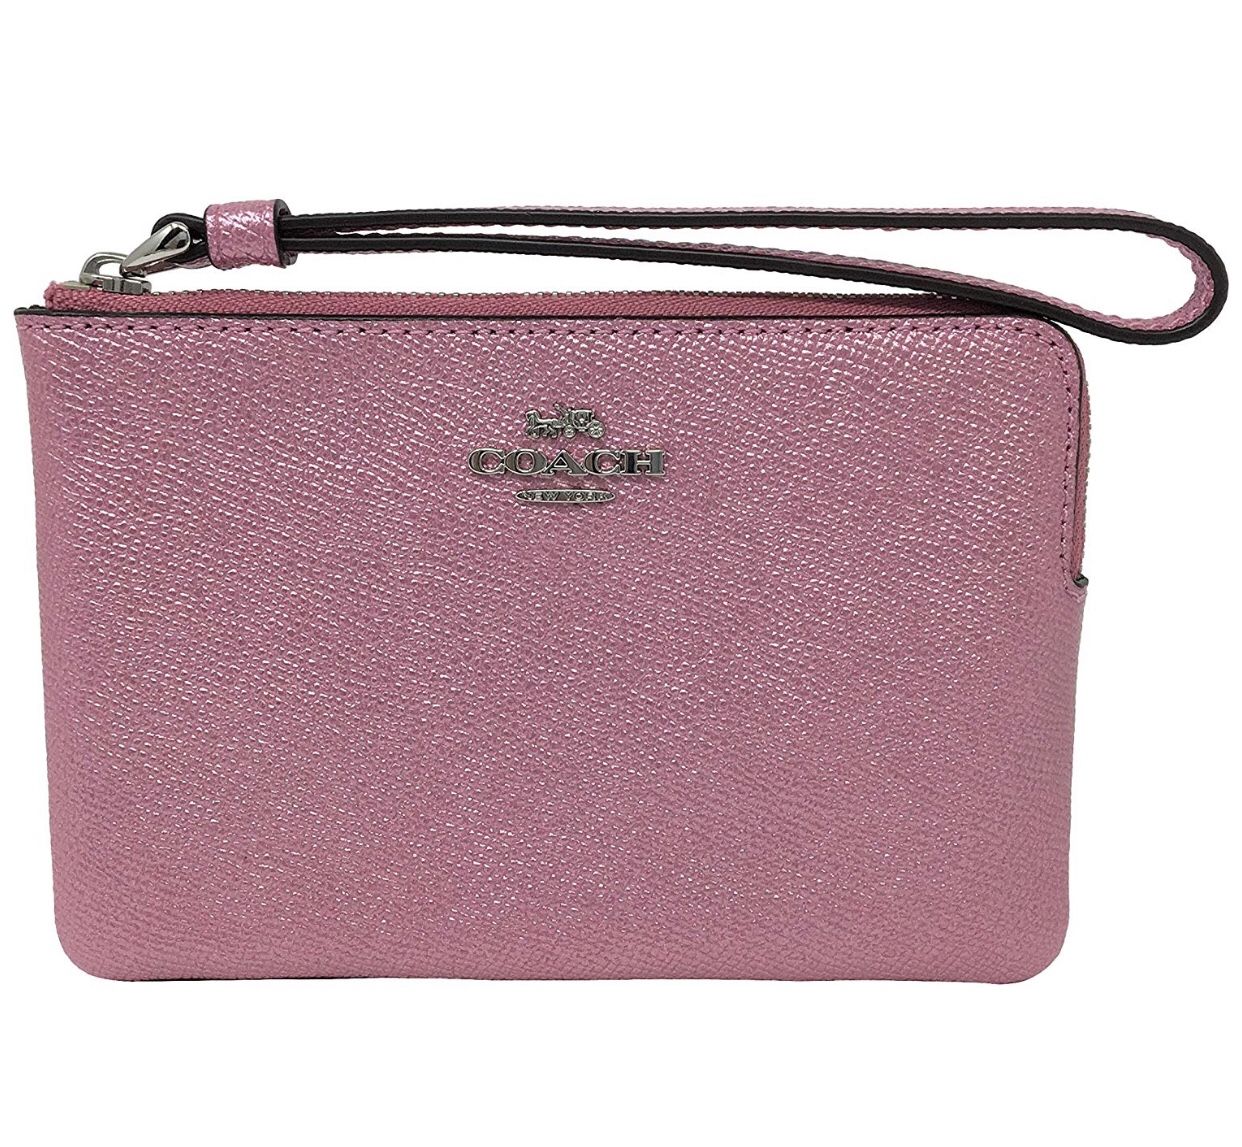 Coach Wristlet clutch wrist wallet pink brand new authentic